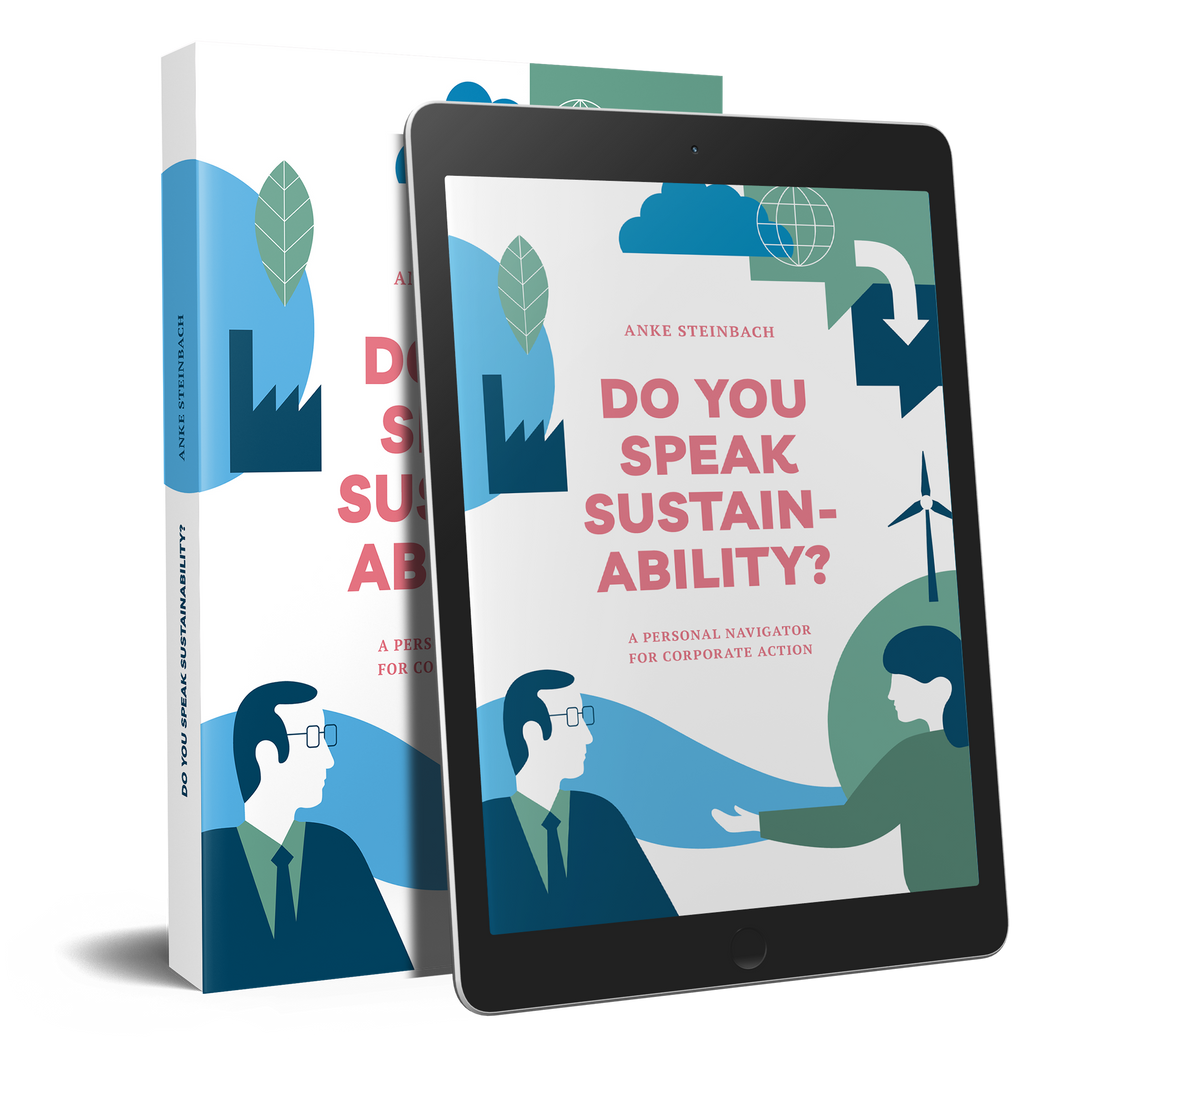 Ebook and Hardcover Bundle &quot;Do you speak sustainabilty?&quot;